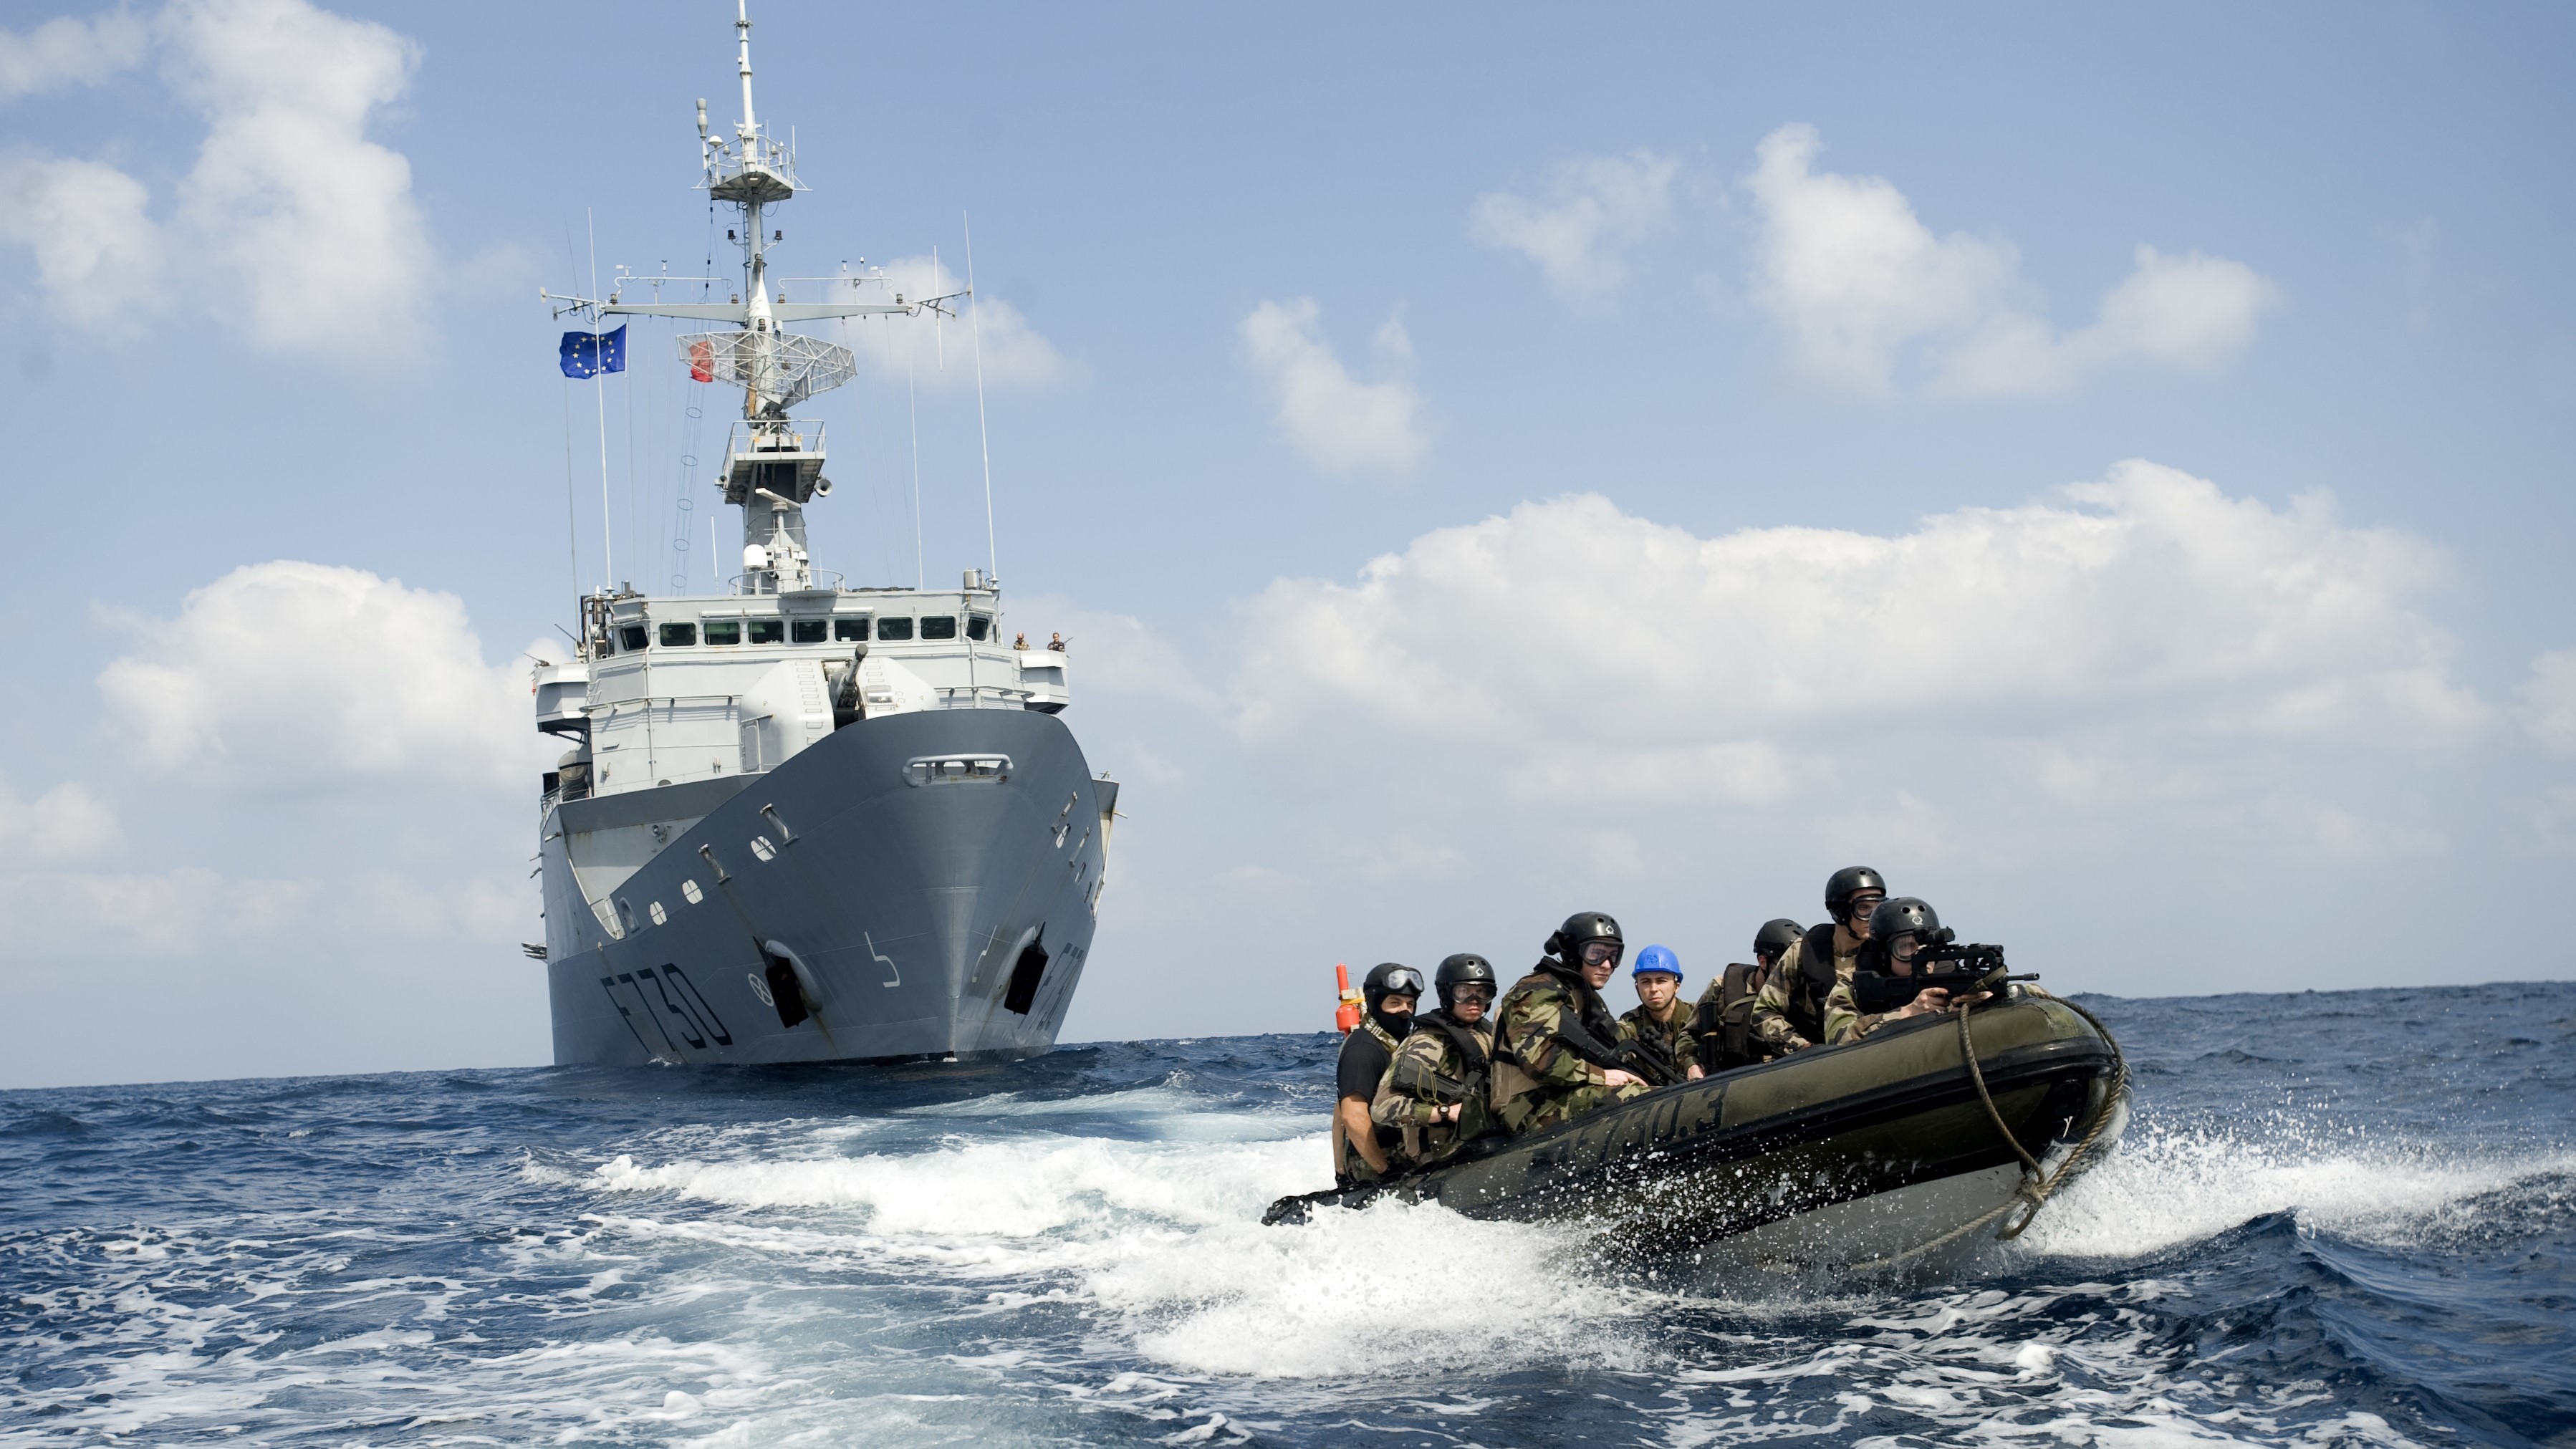 Public consultation on EU Maritime Security Strategy